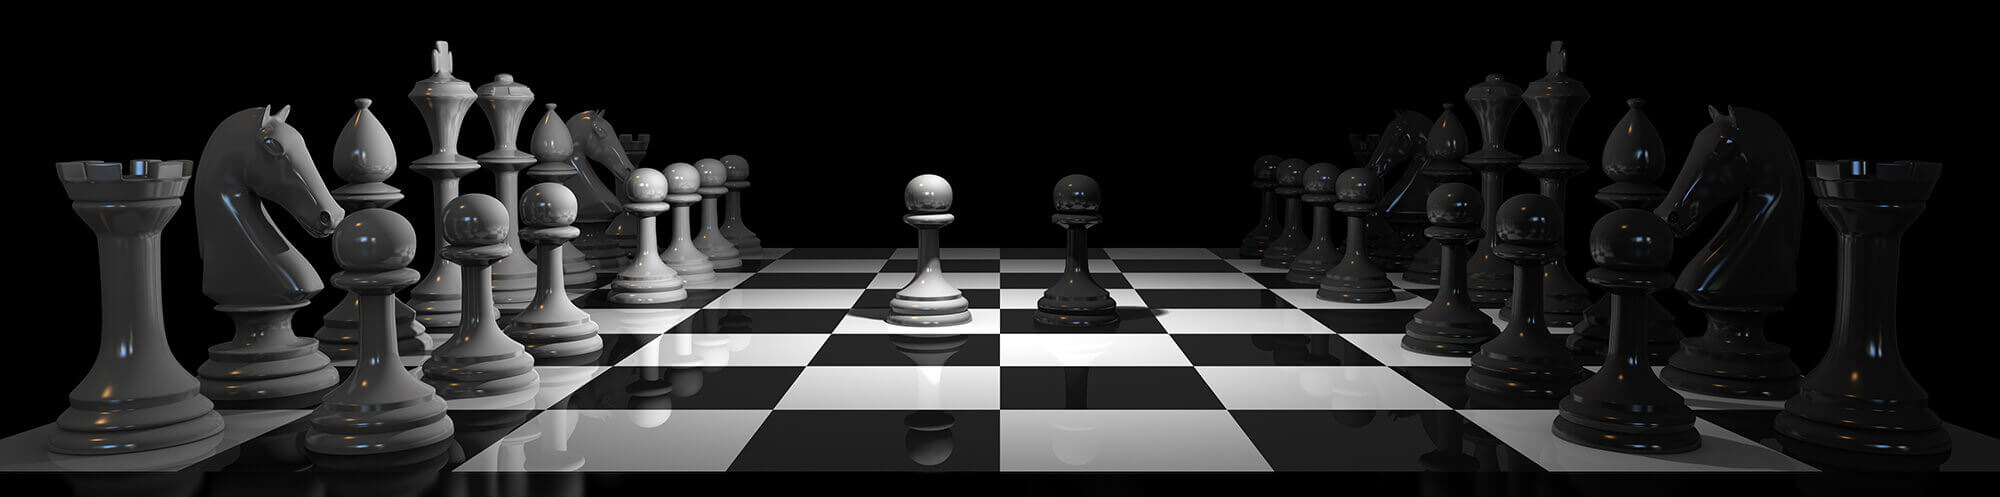 “Chessboard”